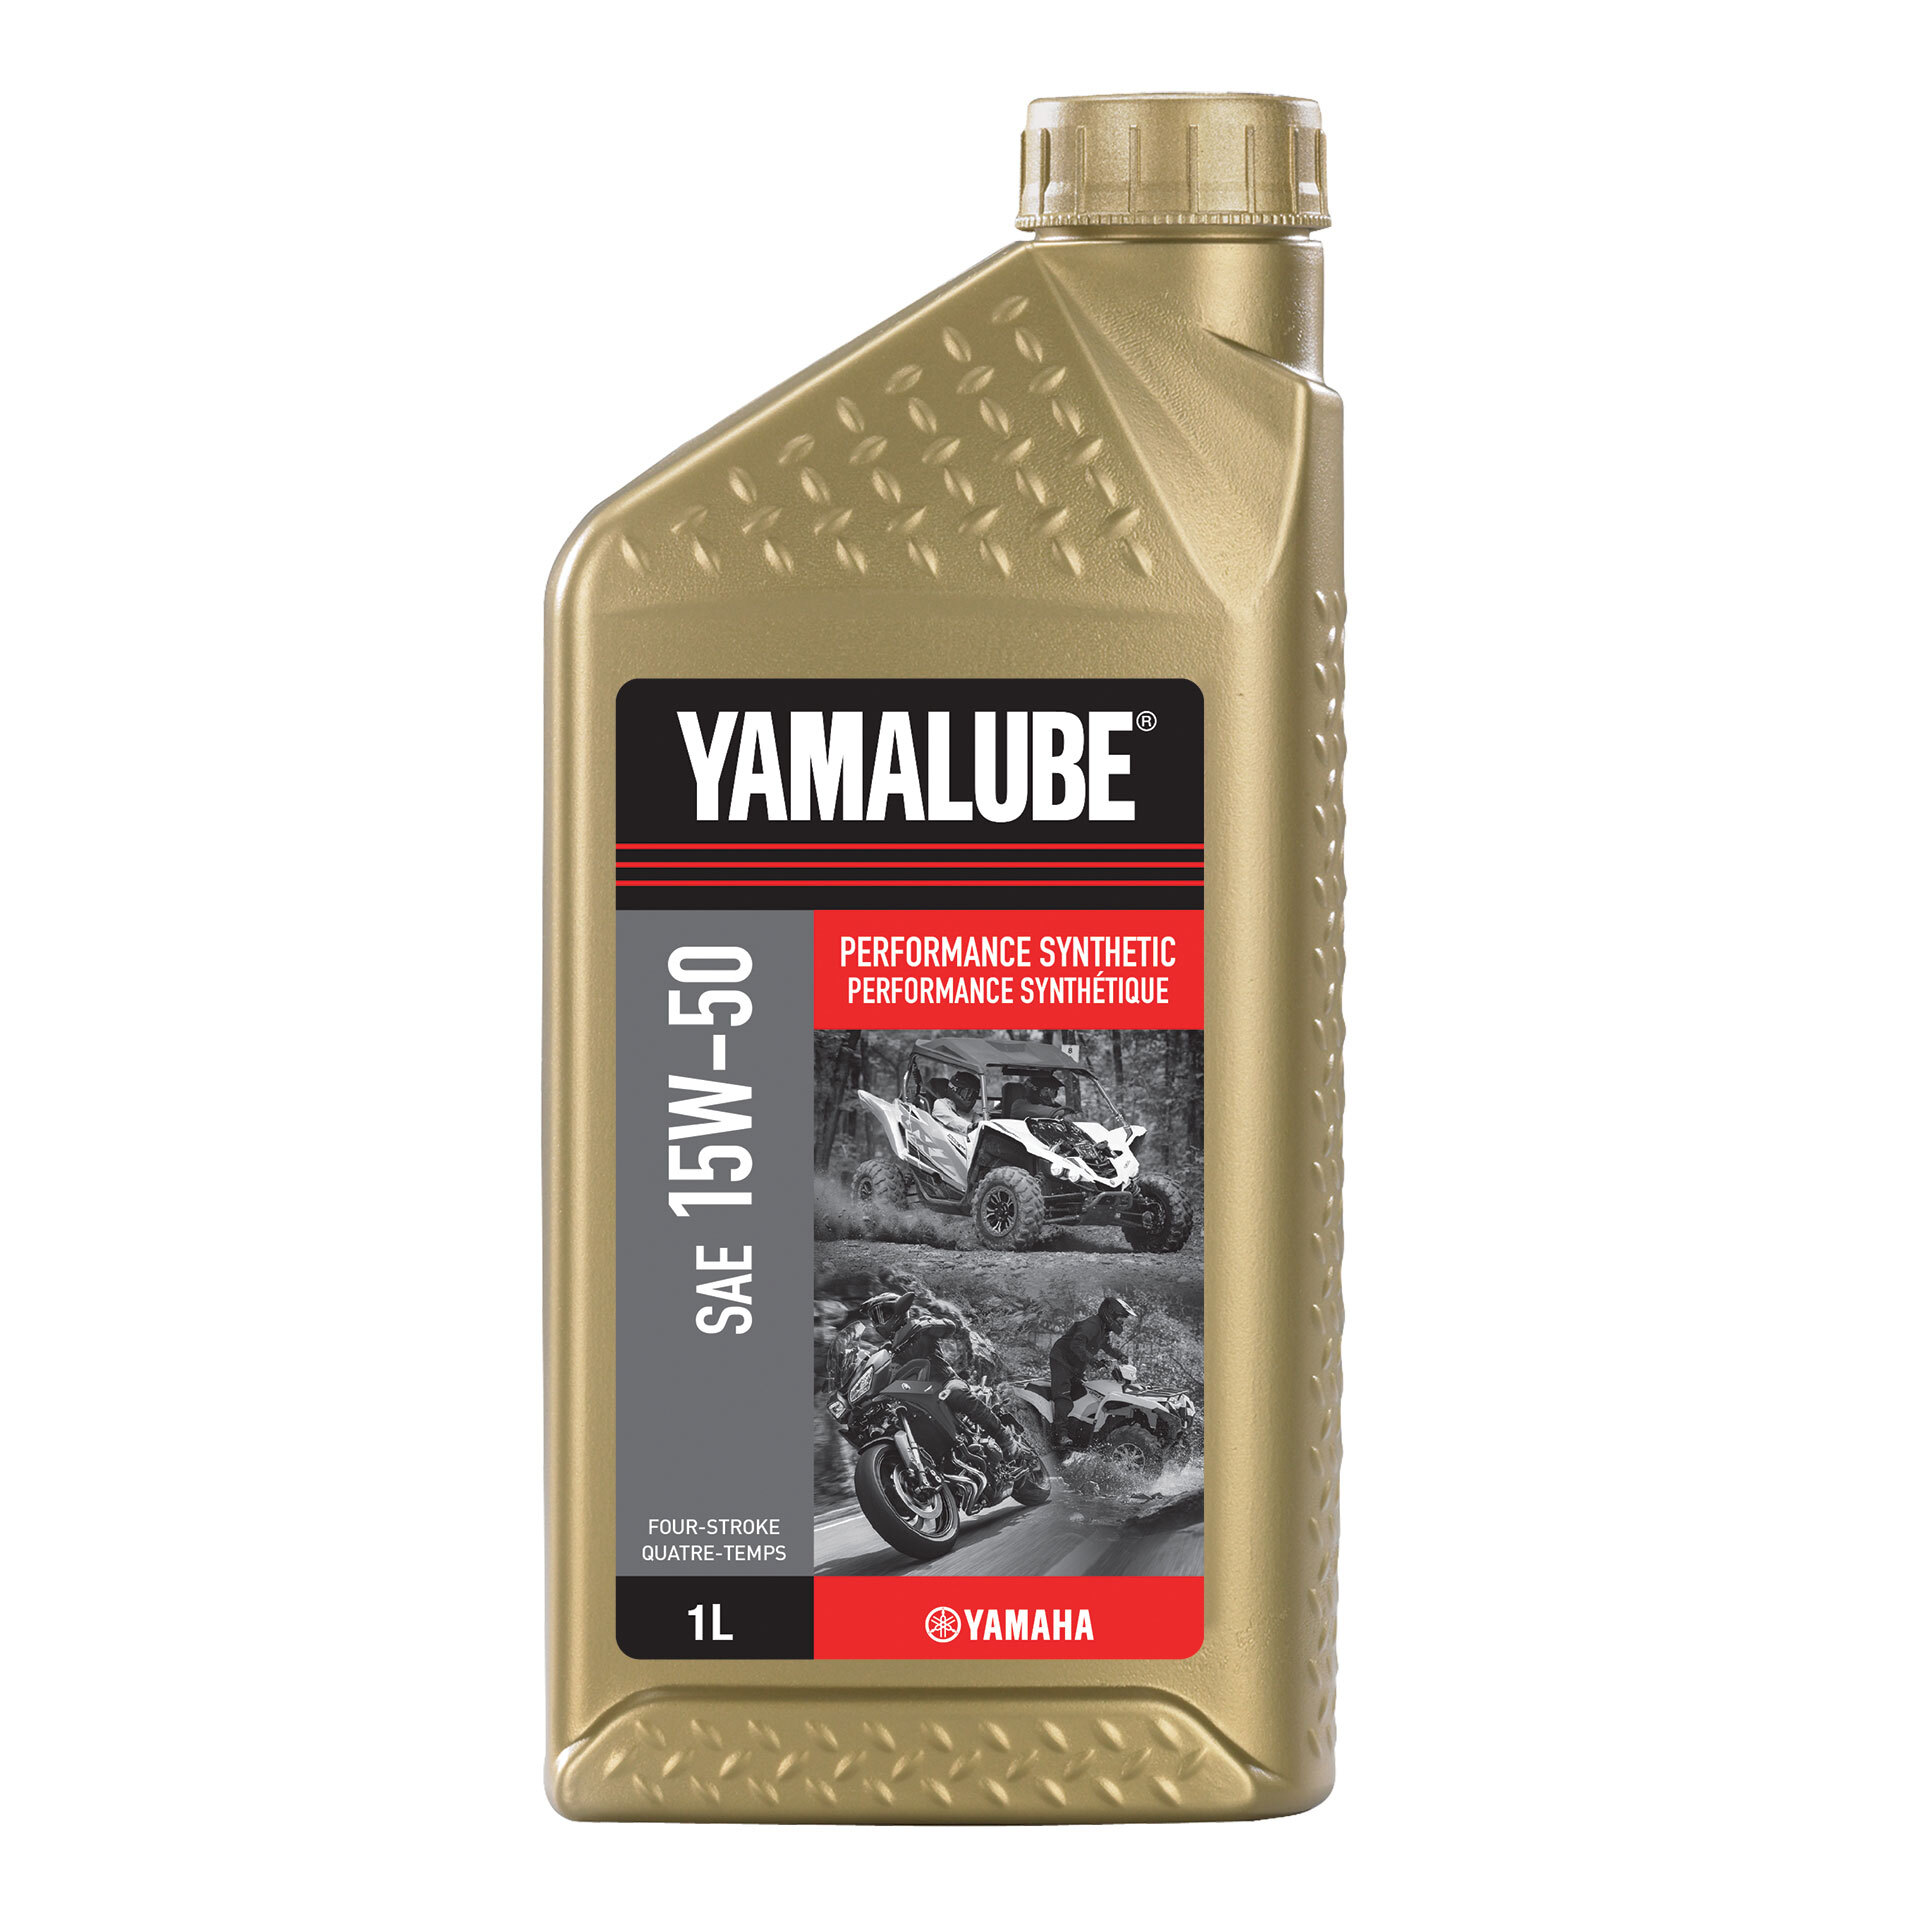 Yamalube® 15W 50 Performance Synthetic Engine Oil